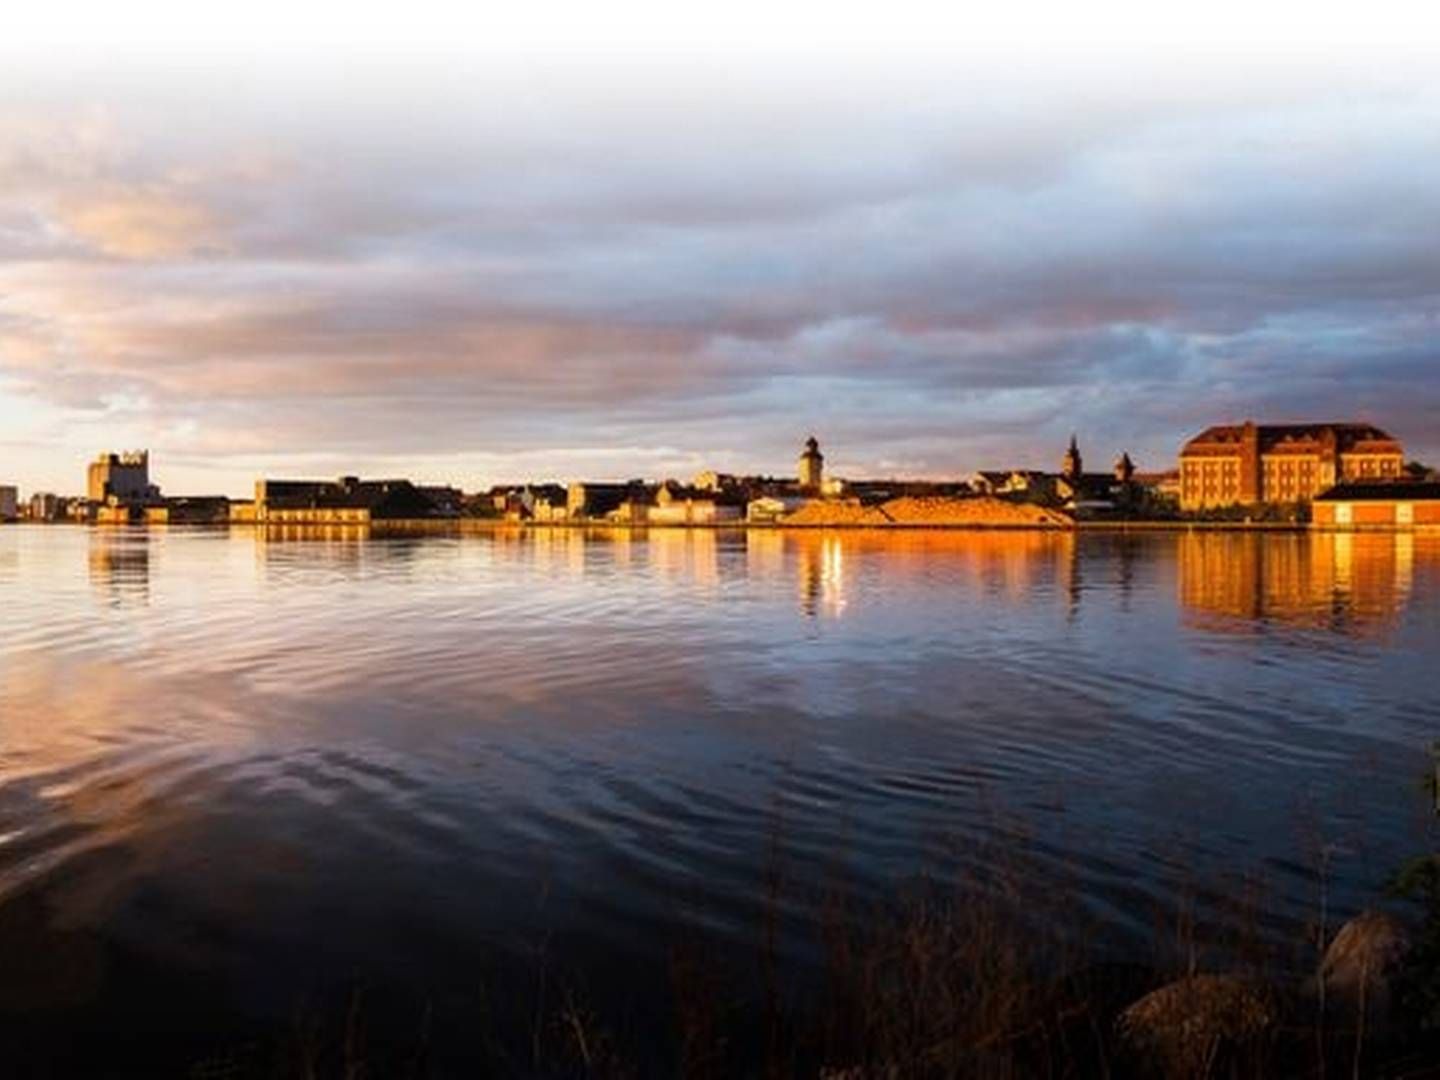 Guldborgsund Kommune vil skabe mere liv omkring byens erhvervshavn. | Foto: PR / Guldborgsund Kommune